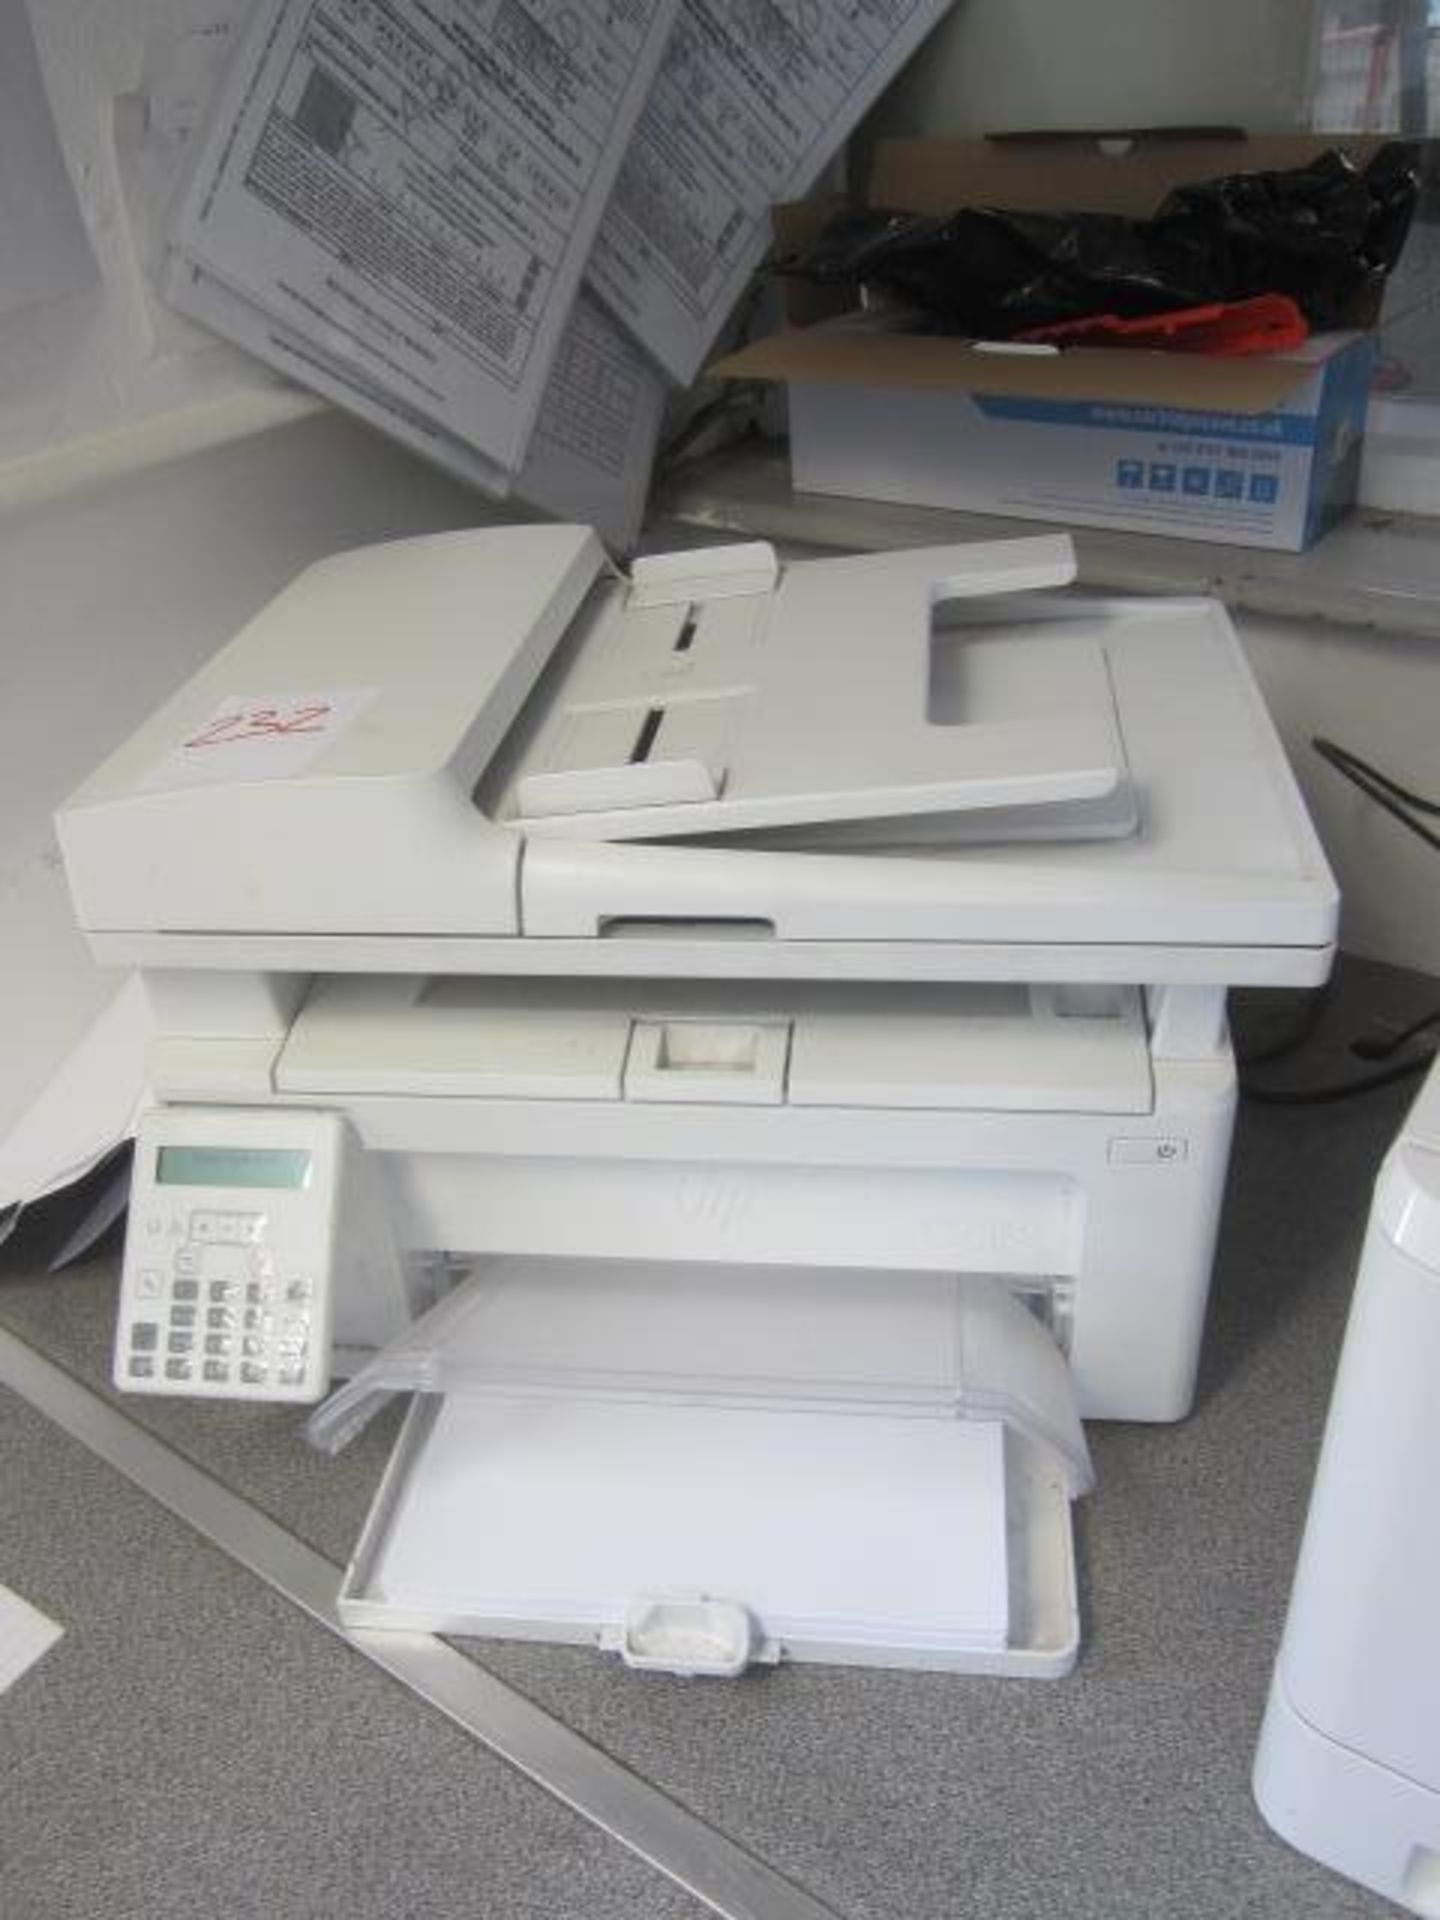 HP Color Laserjet Pro M454dw and a HP Laserjet Pro MFP M130fn printer - Image 3 of 3